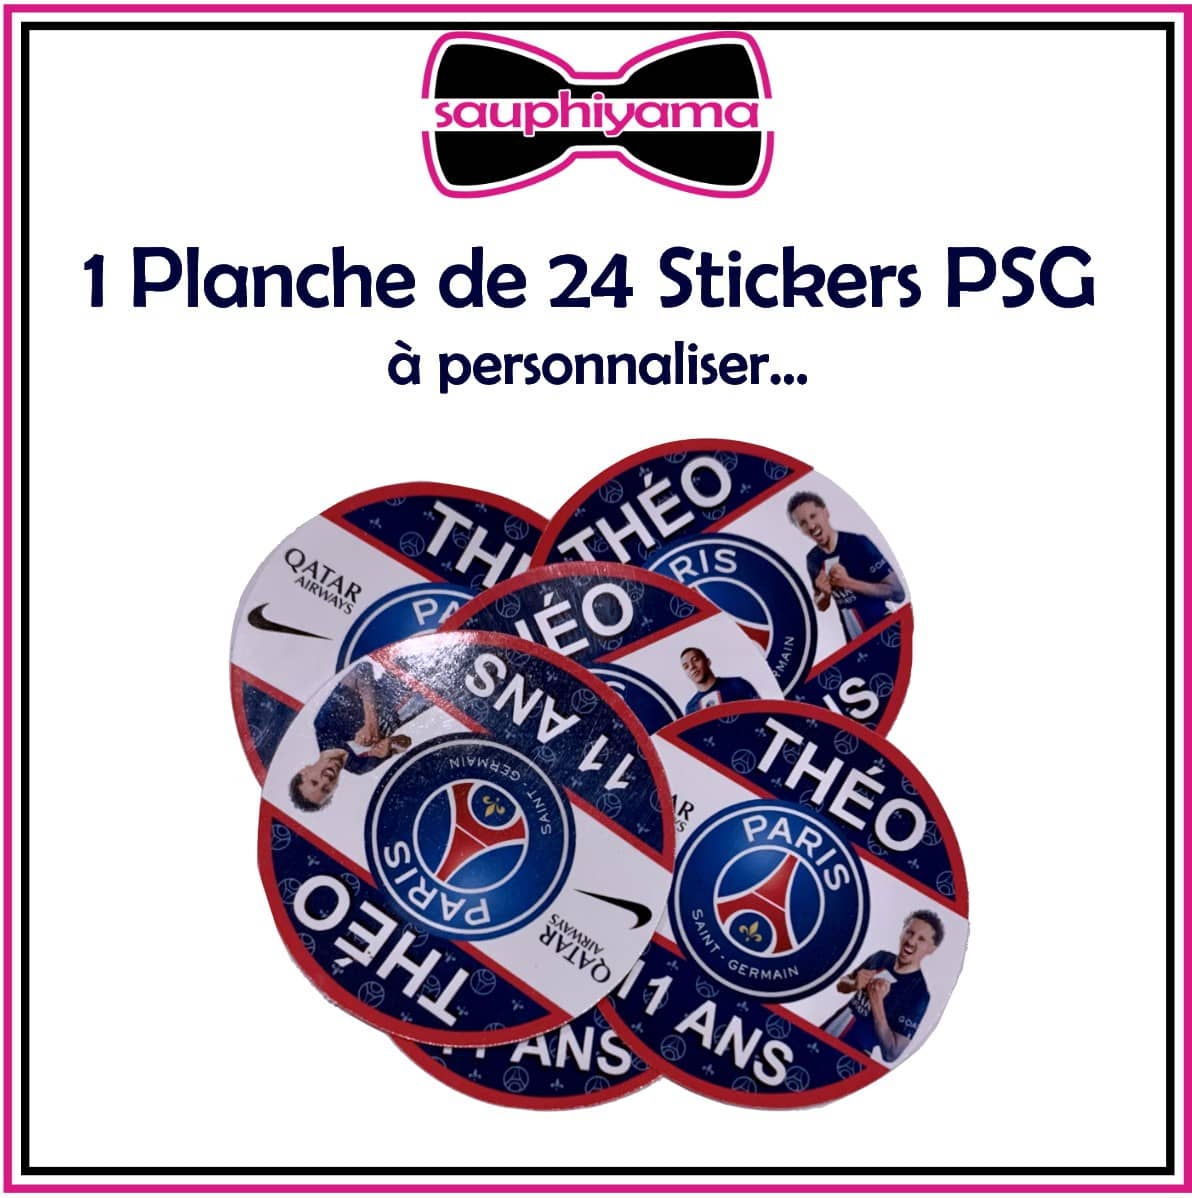 PSG' Sticker